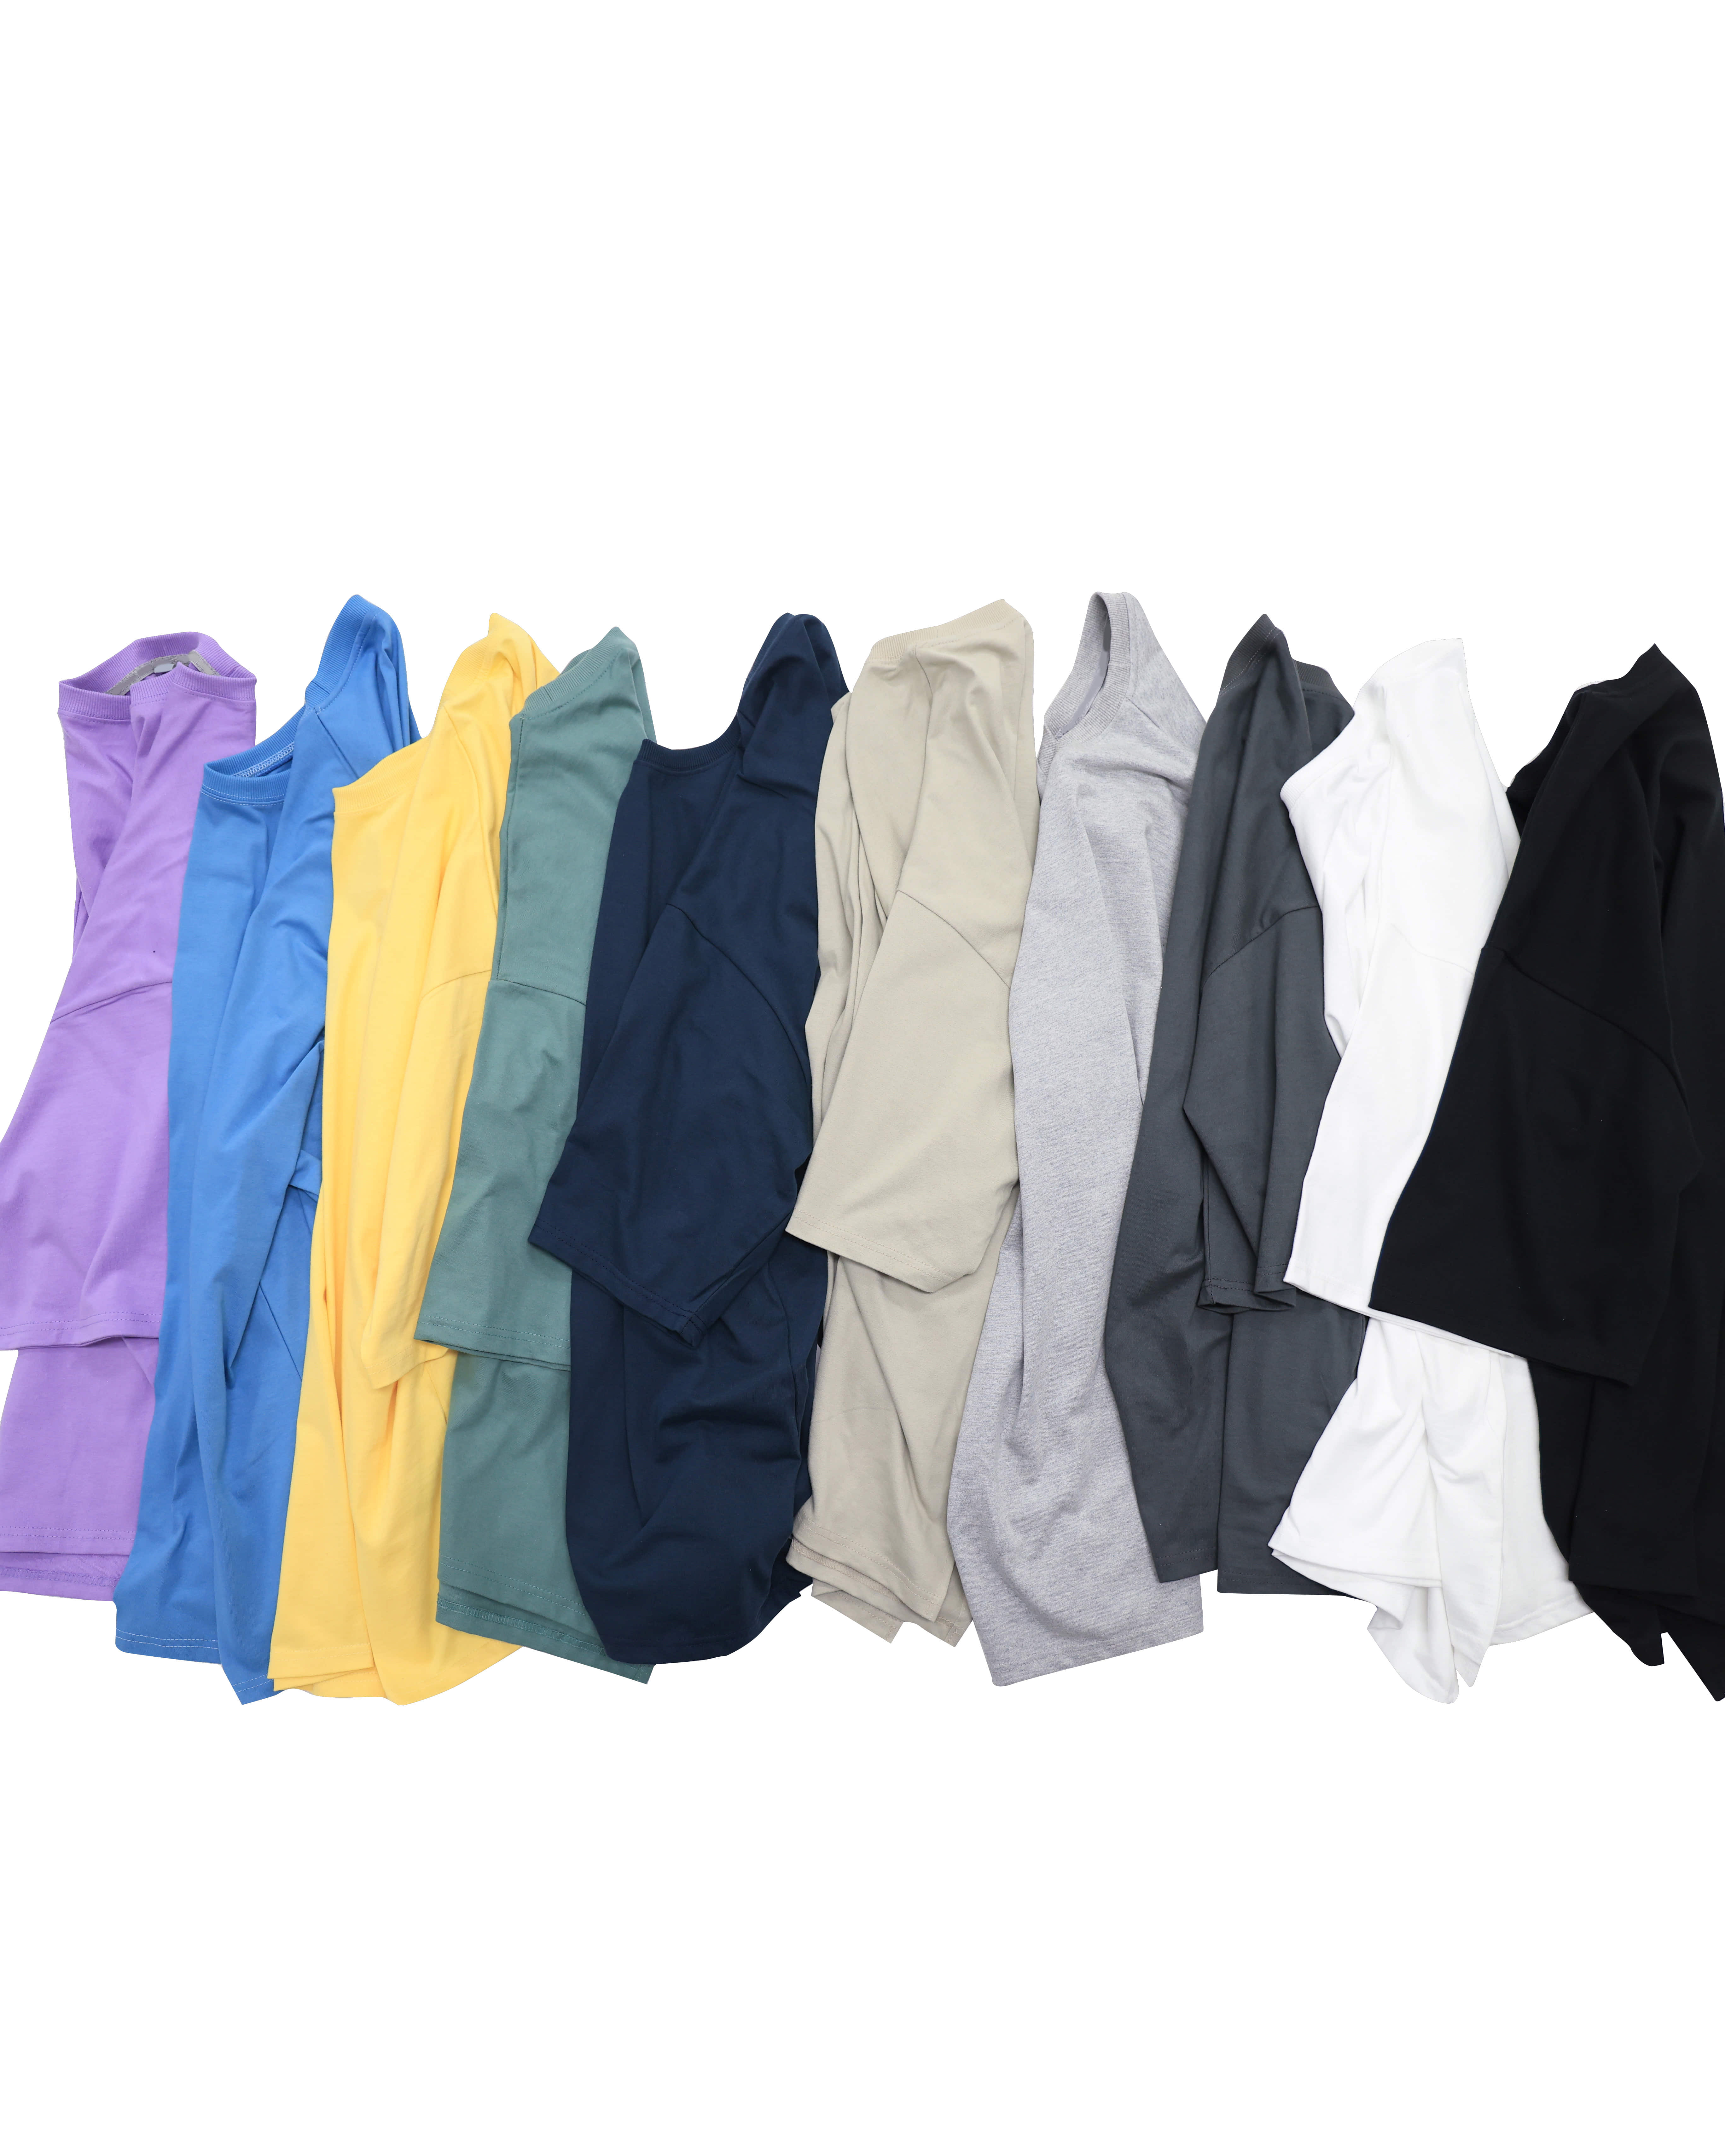 Box Fit Basic T-Shirts (Black/Charcoal/Navy/Gray/Beige/Purple/Blue/Green/Yellow/White)